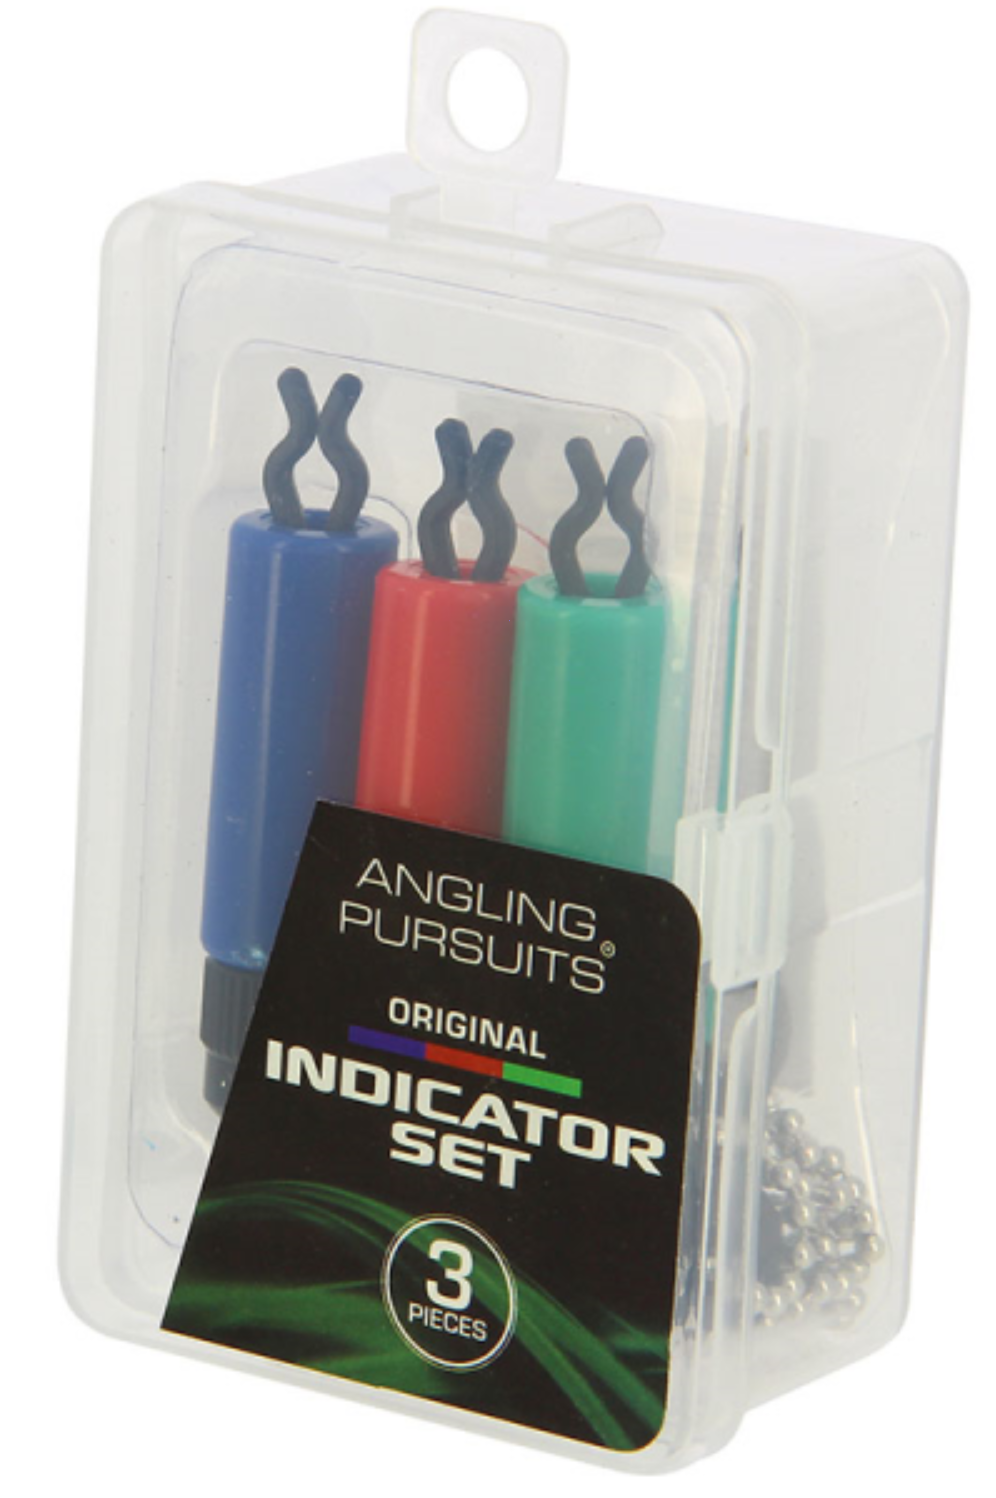 Angling Pursuits Original Indicator Set - 3 Chain Indicators In Case